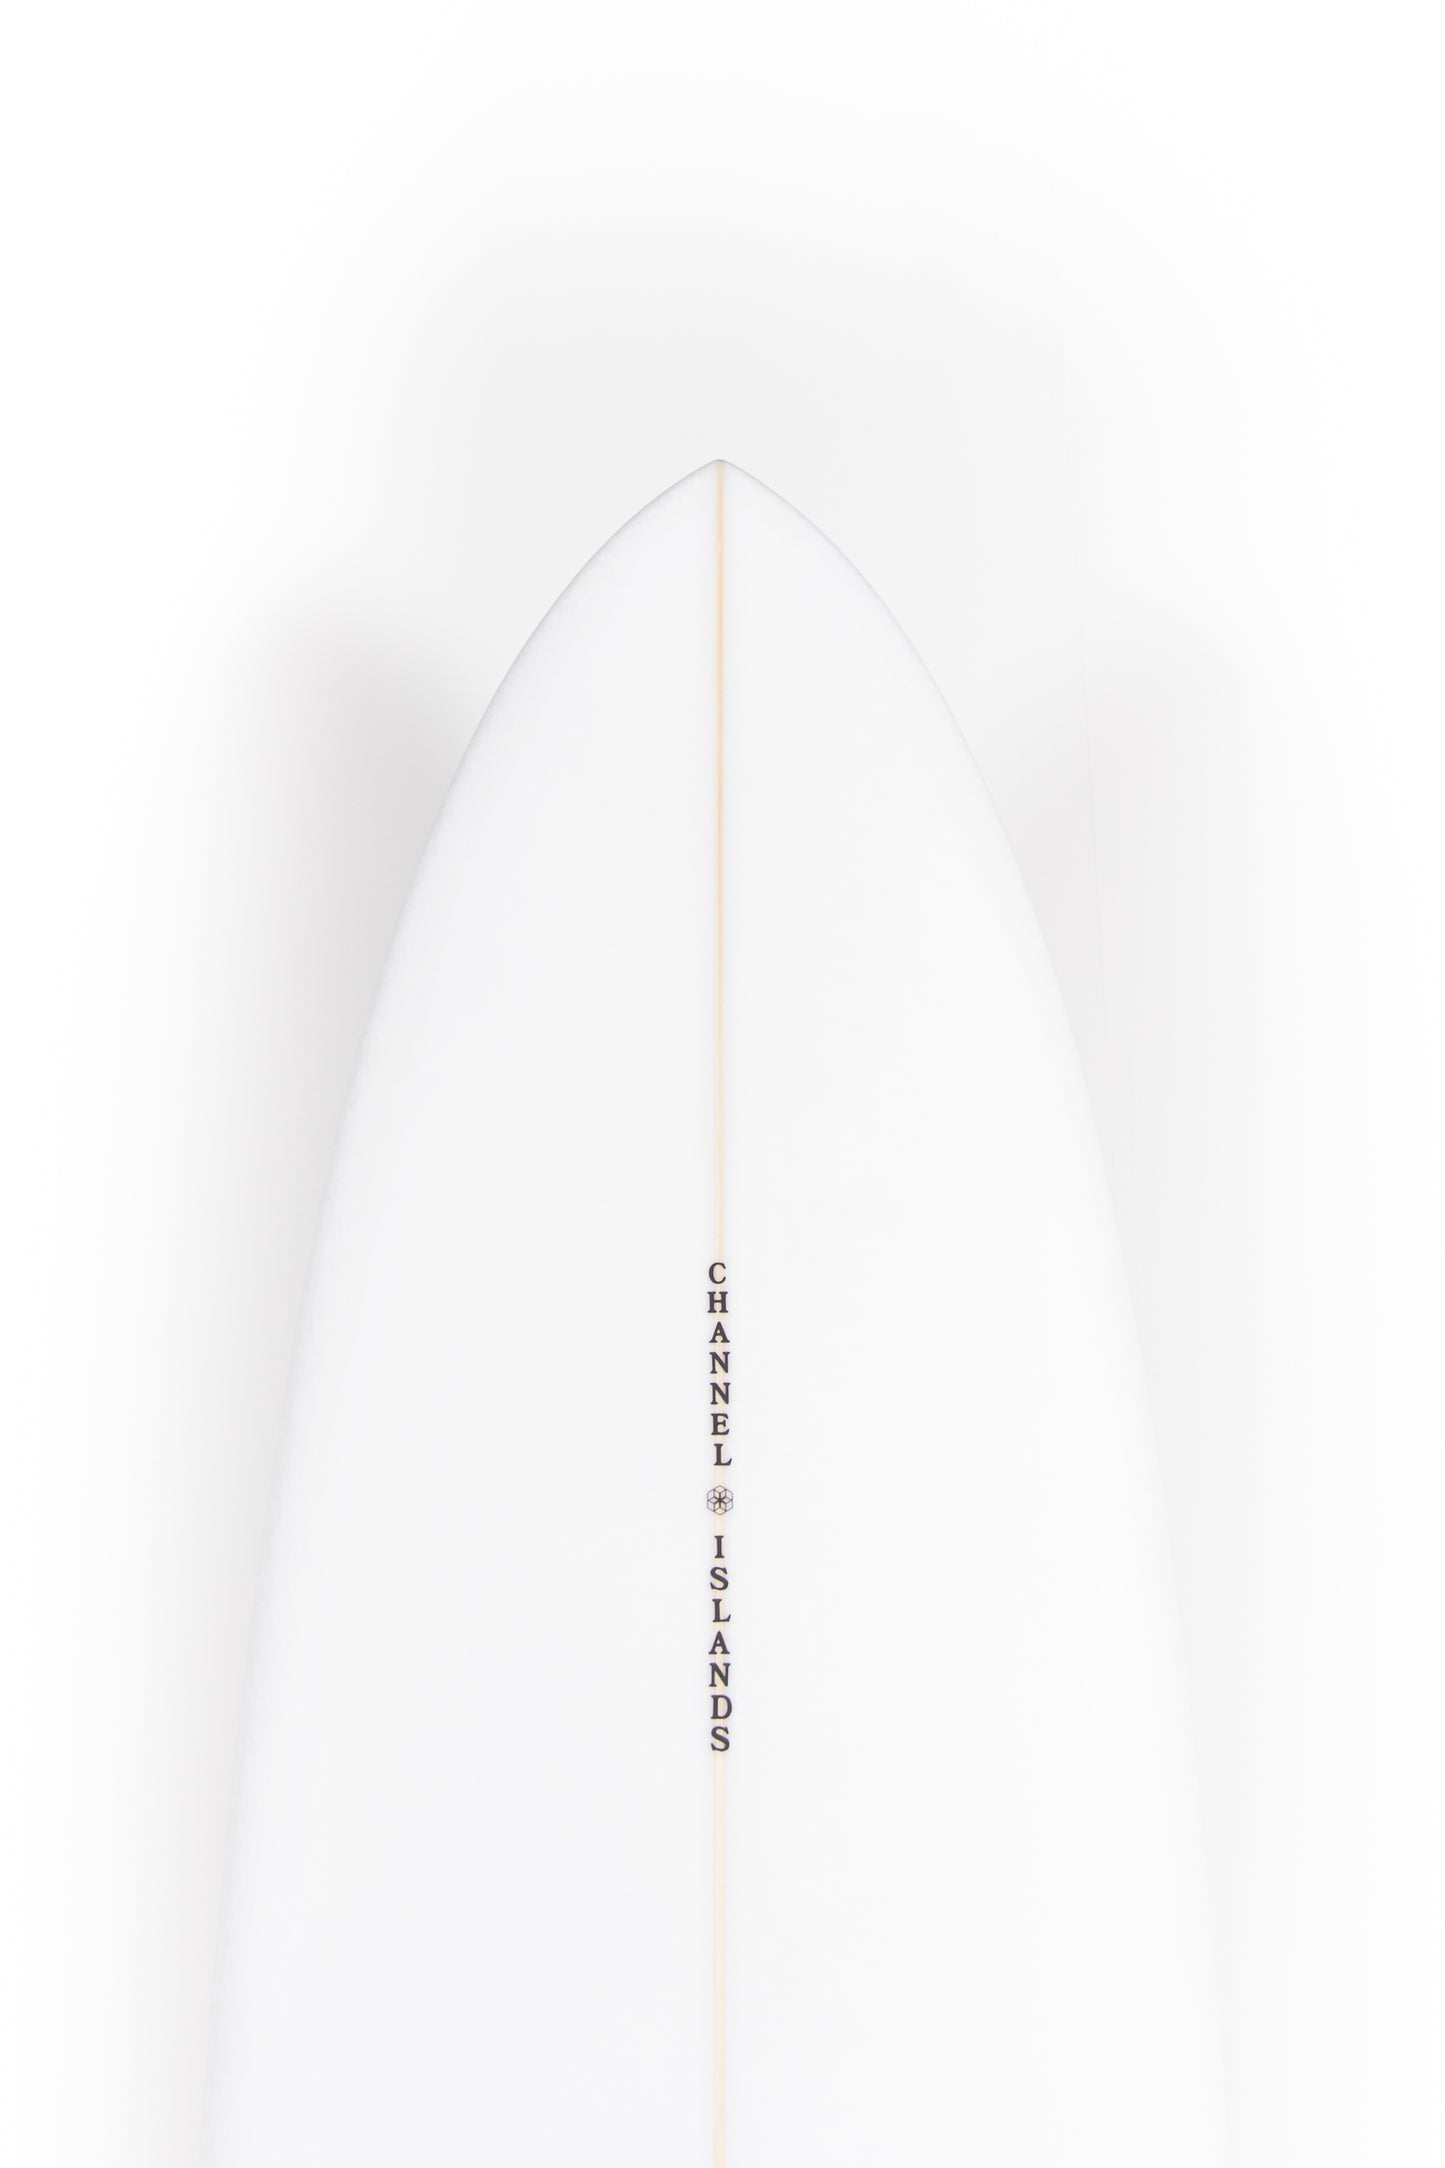 
                  
                    Pukas Surf Shop -  Channel Islands - CI MID TWIN - 7'6" x 21 3/4 x 2 7/8 - 51.80L - CI32369
                  
                